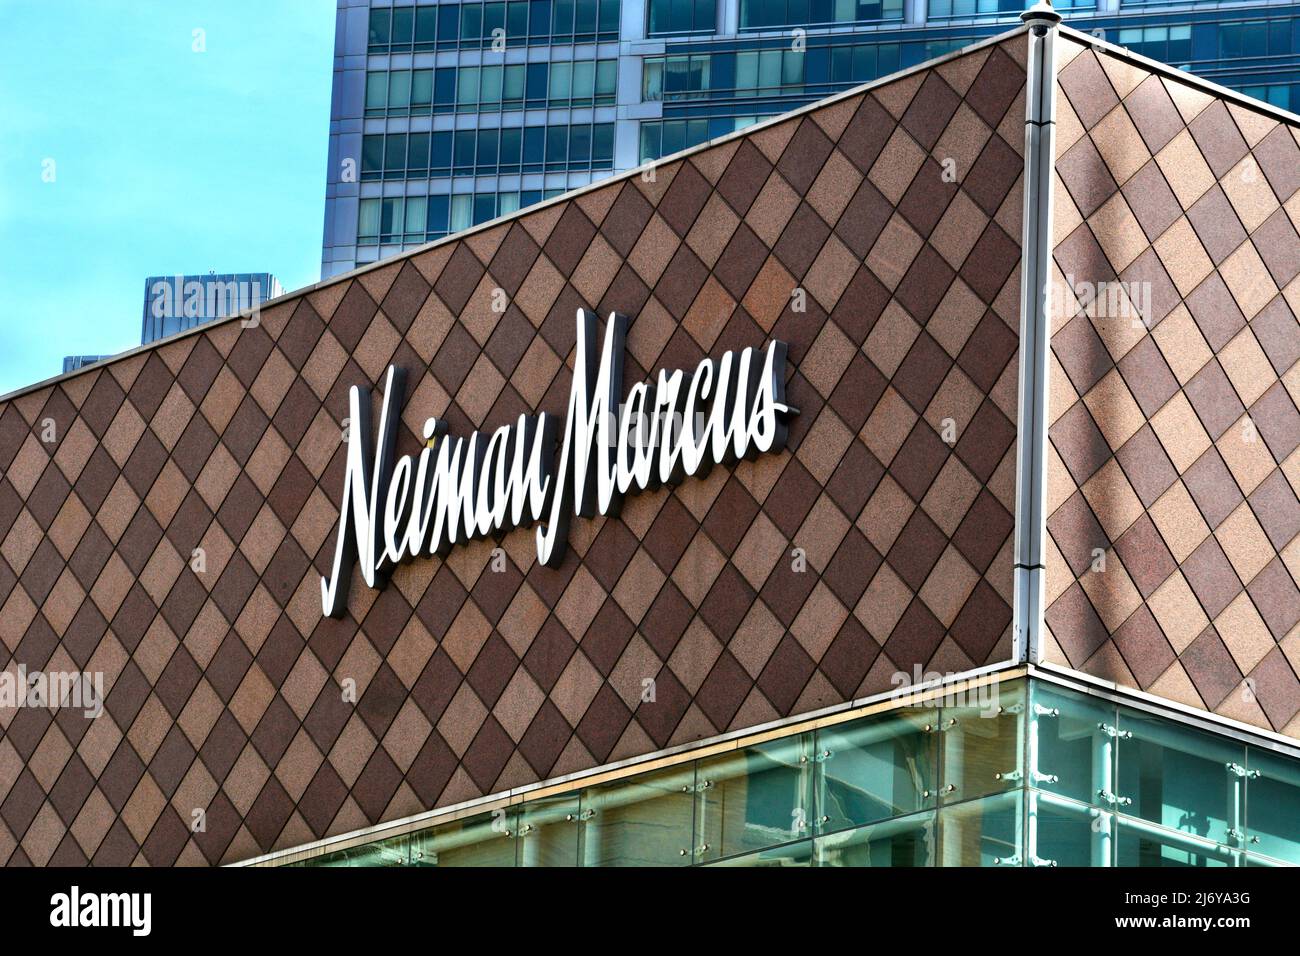 File:Neiman Marcus Flagship Interior.jpg - Wikipedia